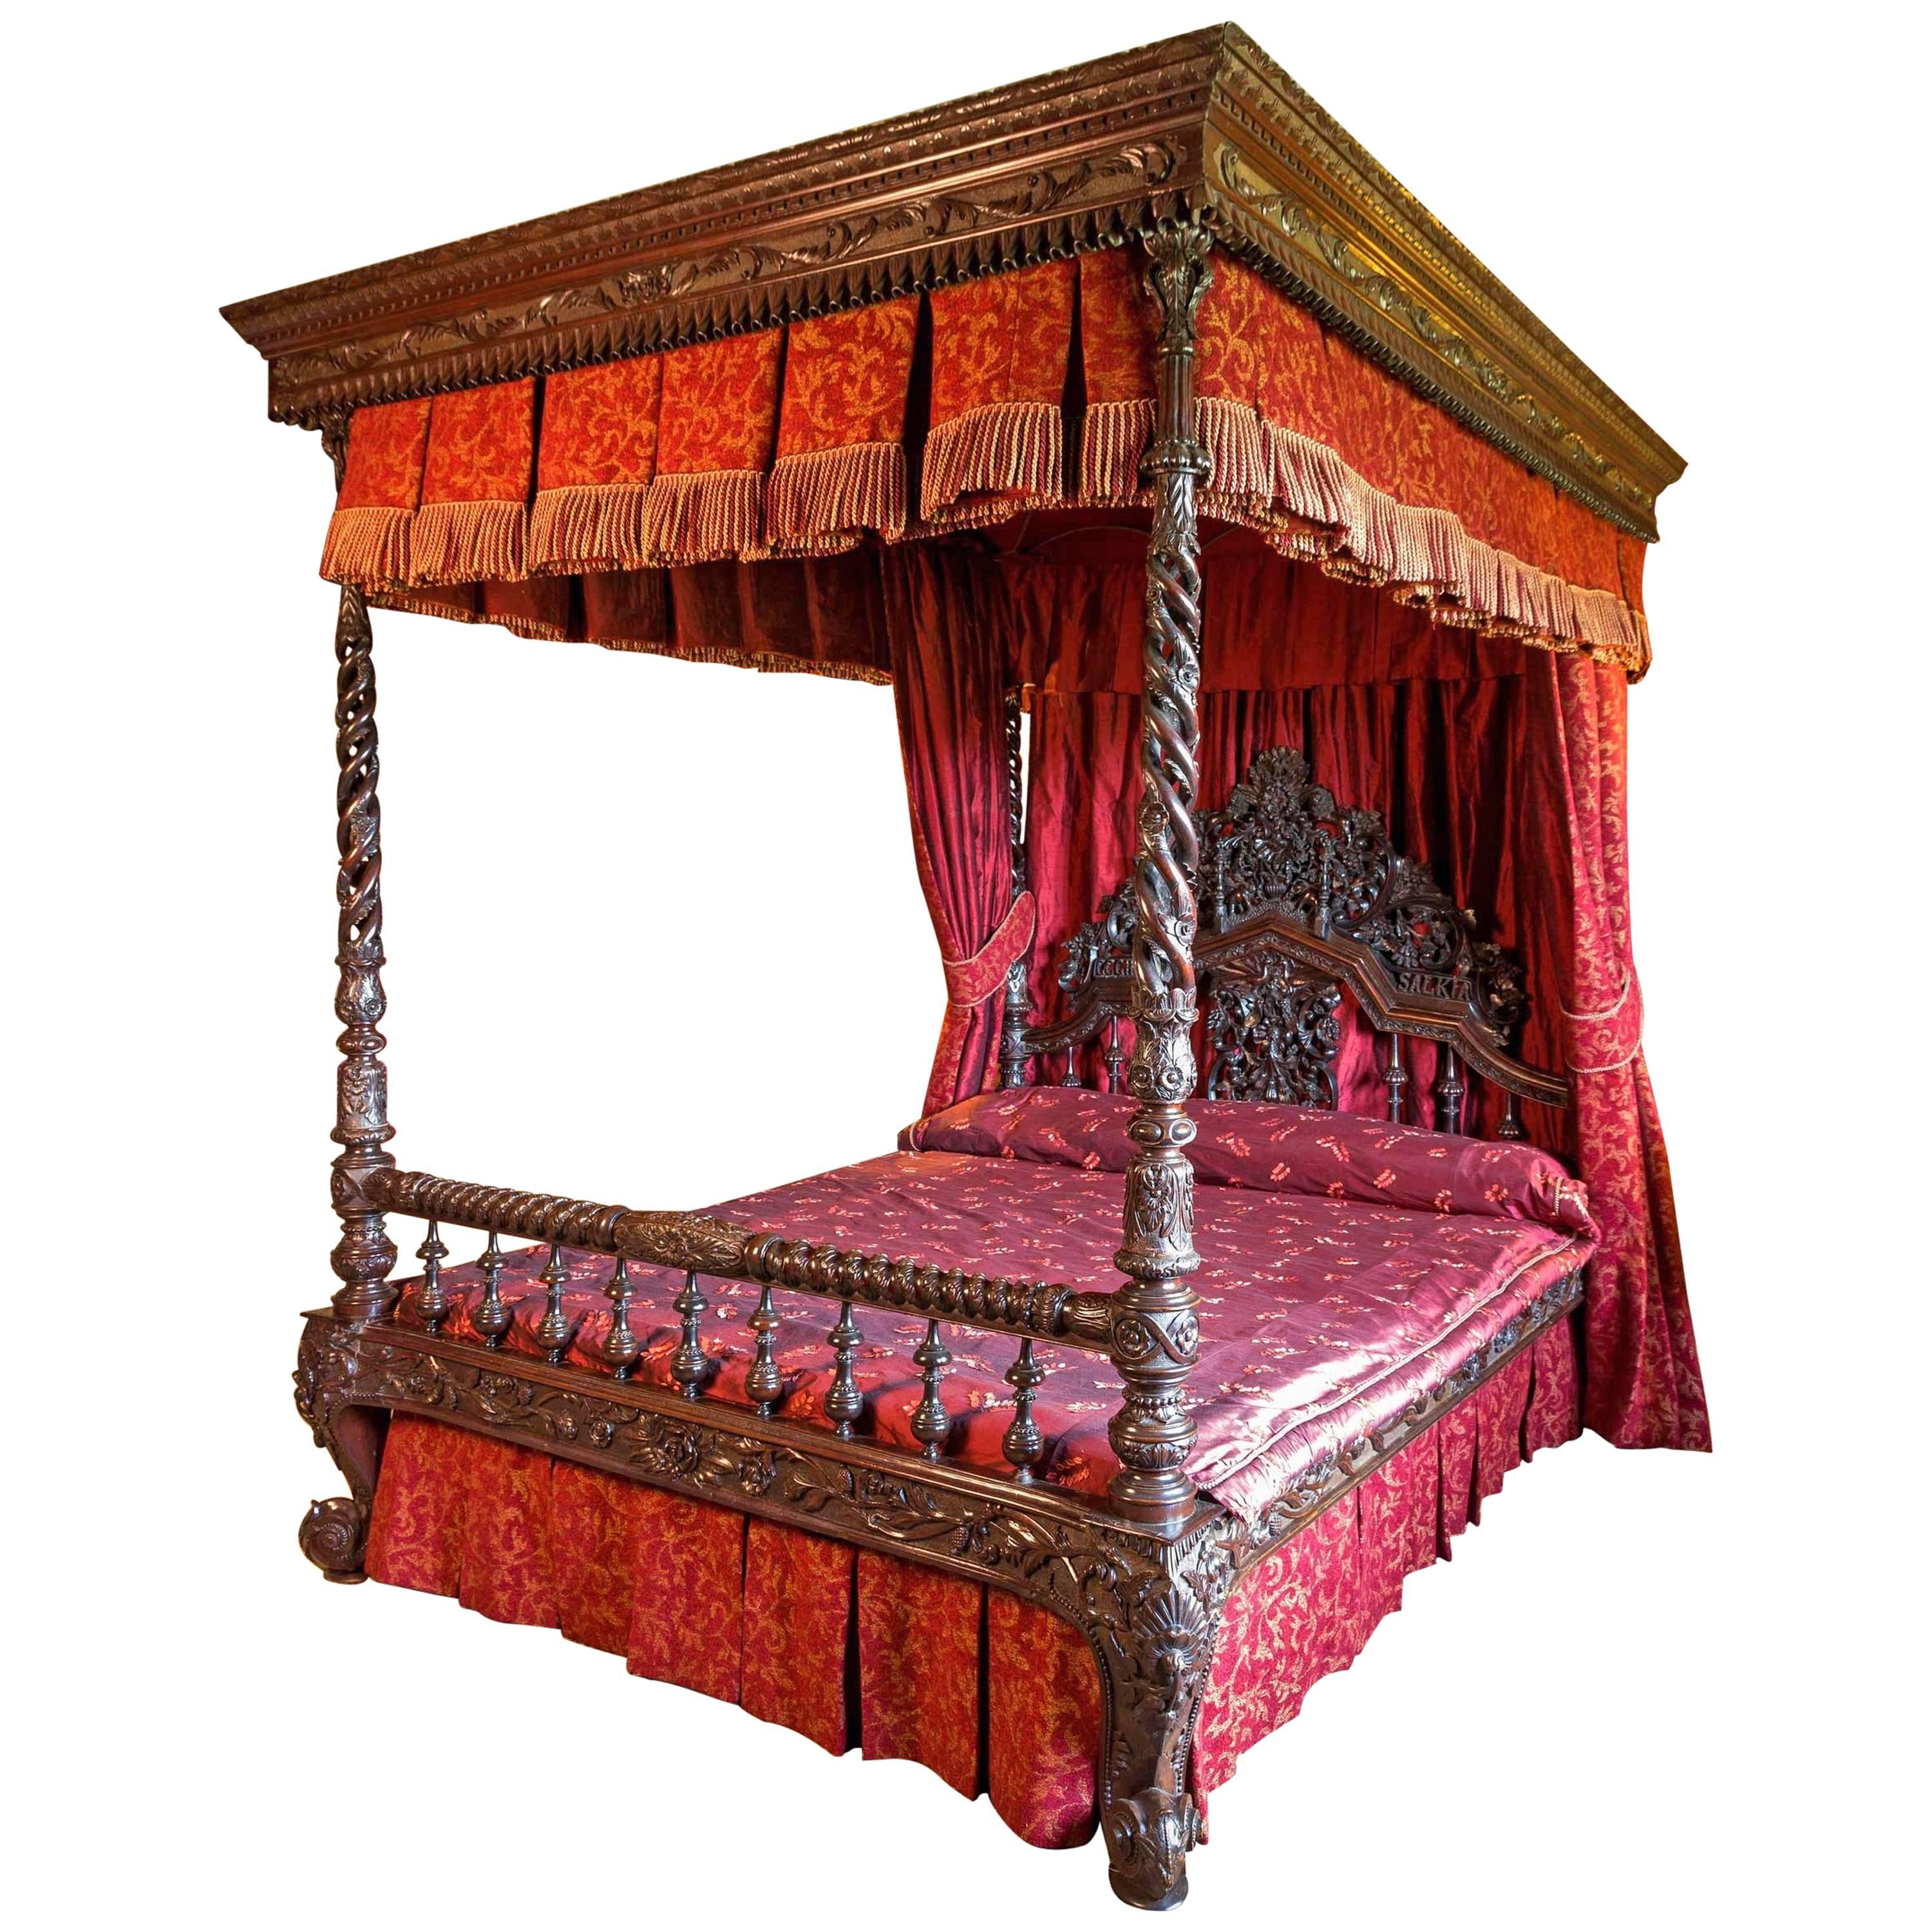 B0k3p india. Балдахин 19 век. Кровать с балдахином 19 век. Кровать с балдахином Готика средневековье. Кровать с пологом Англия конец 17 века.